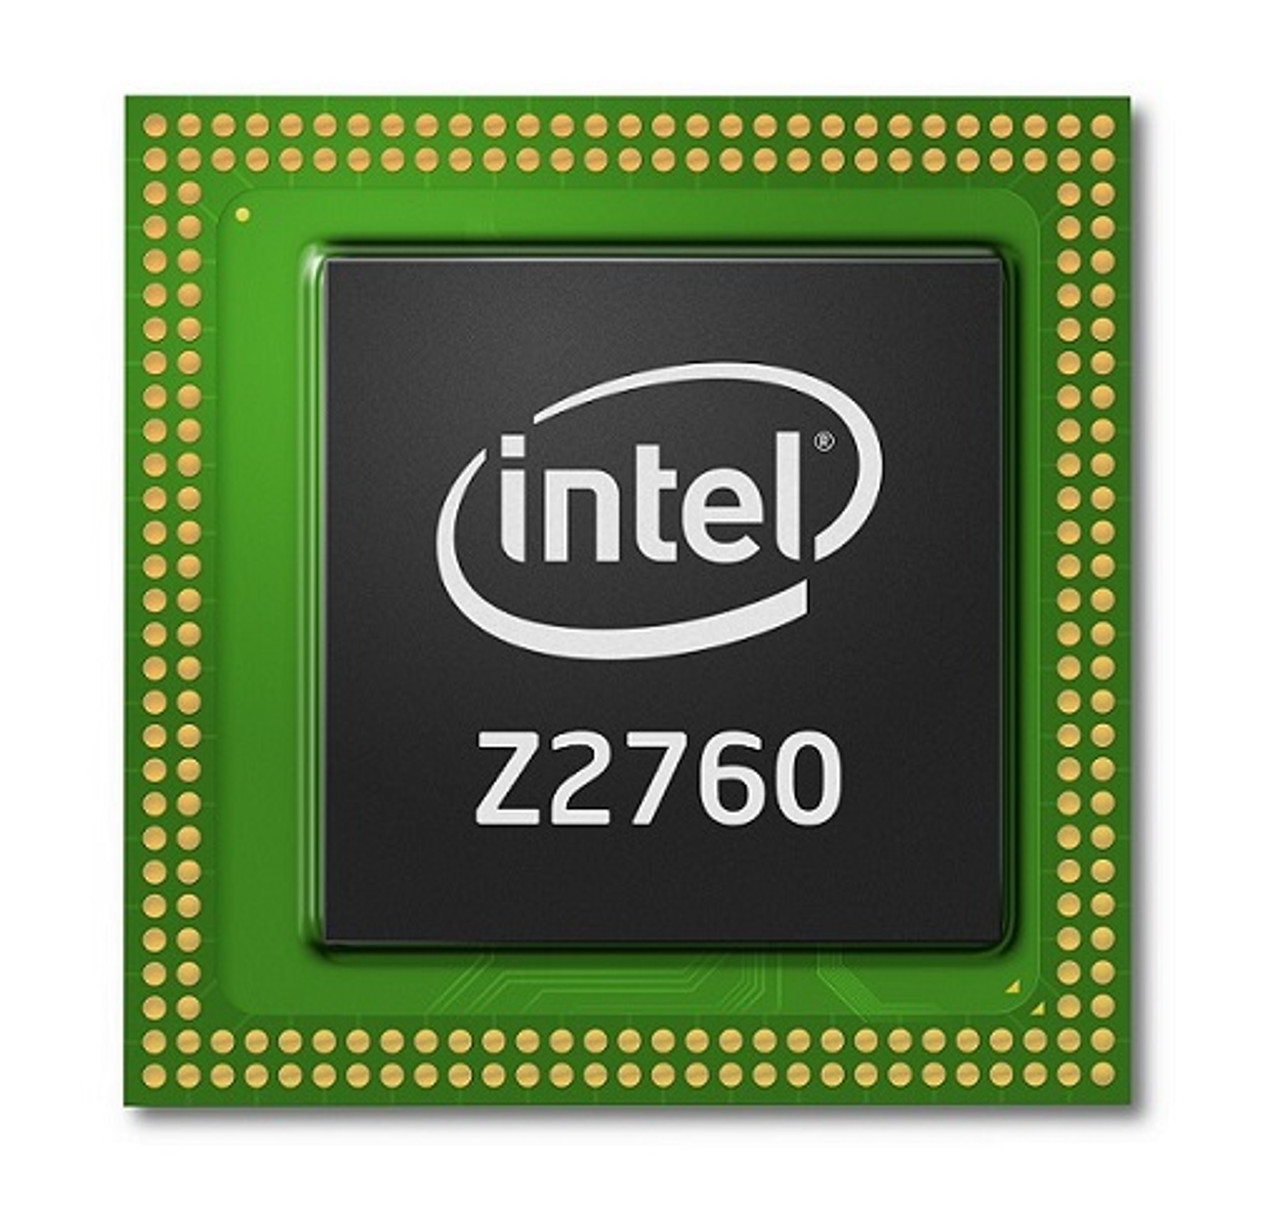 SLB6P - Intel Atom Z530 1.60GHz 533MHz FSB 512KB L2 Cache Socket PBGA441 Processor